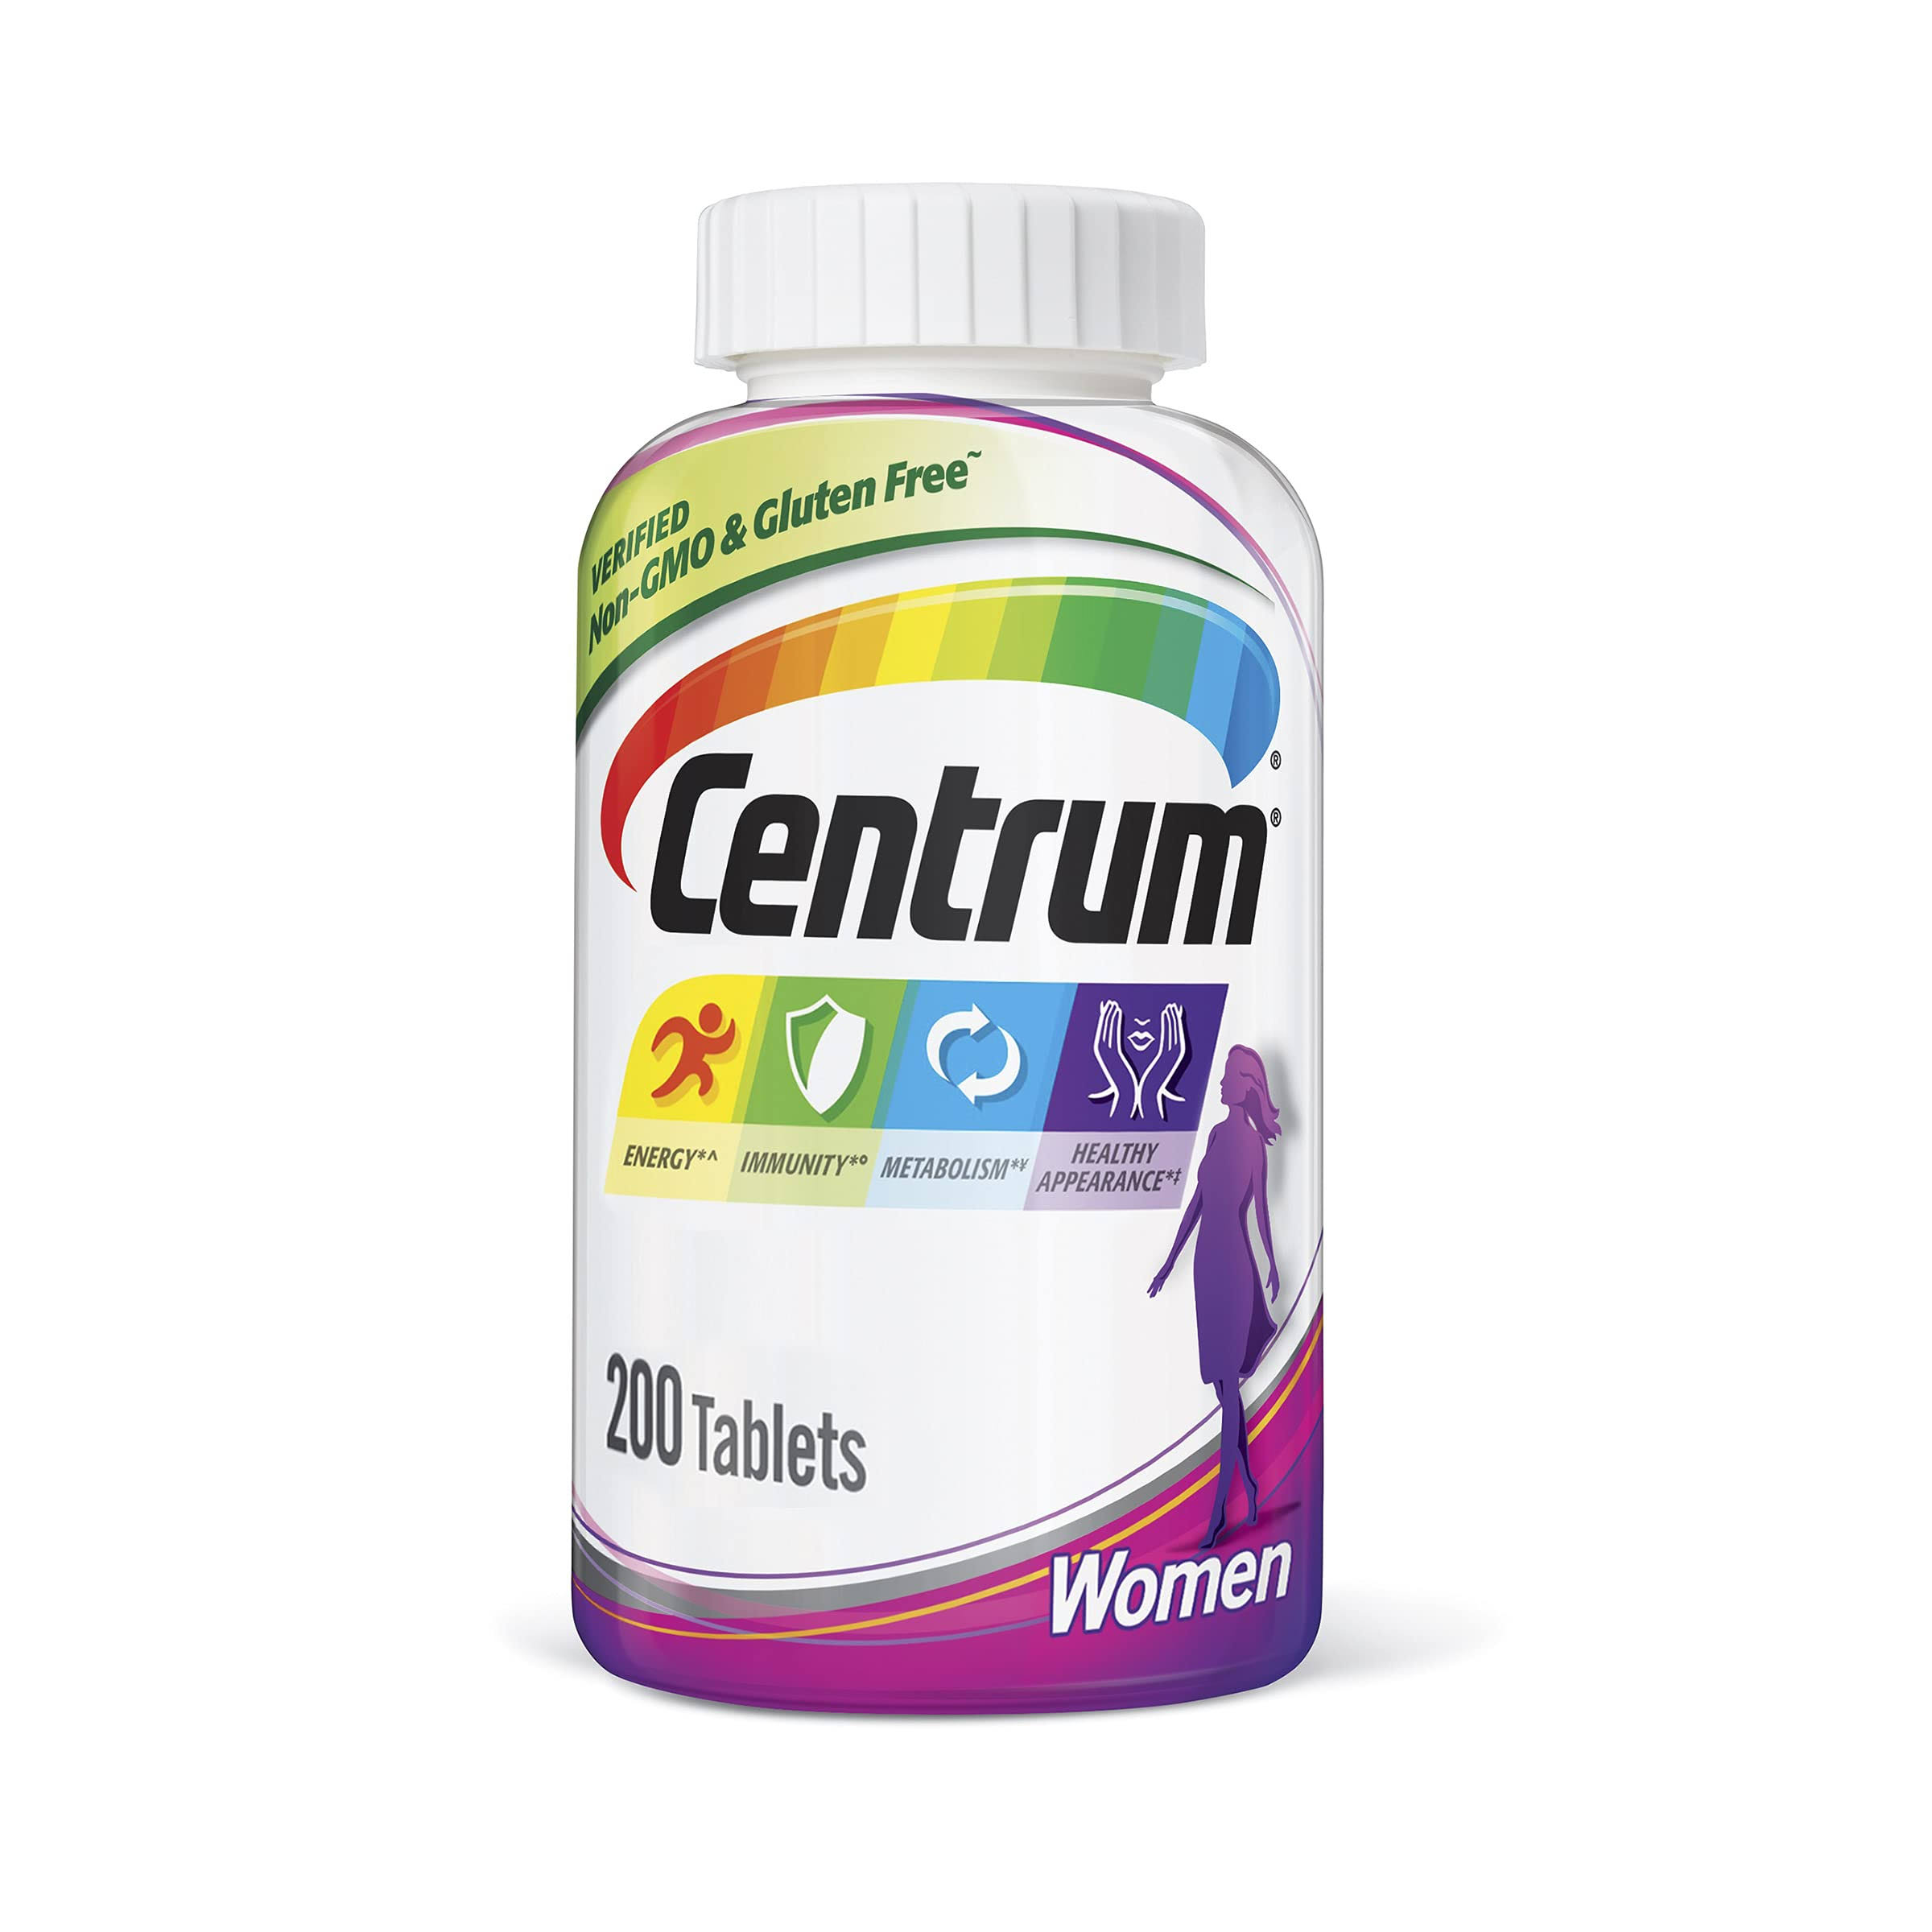 Centrum Women's Multivitamin Supplement - 200 Tablets